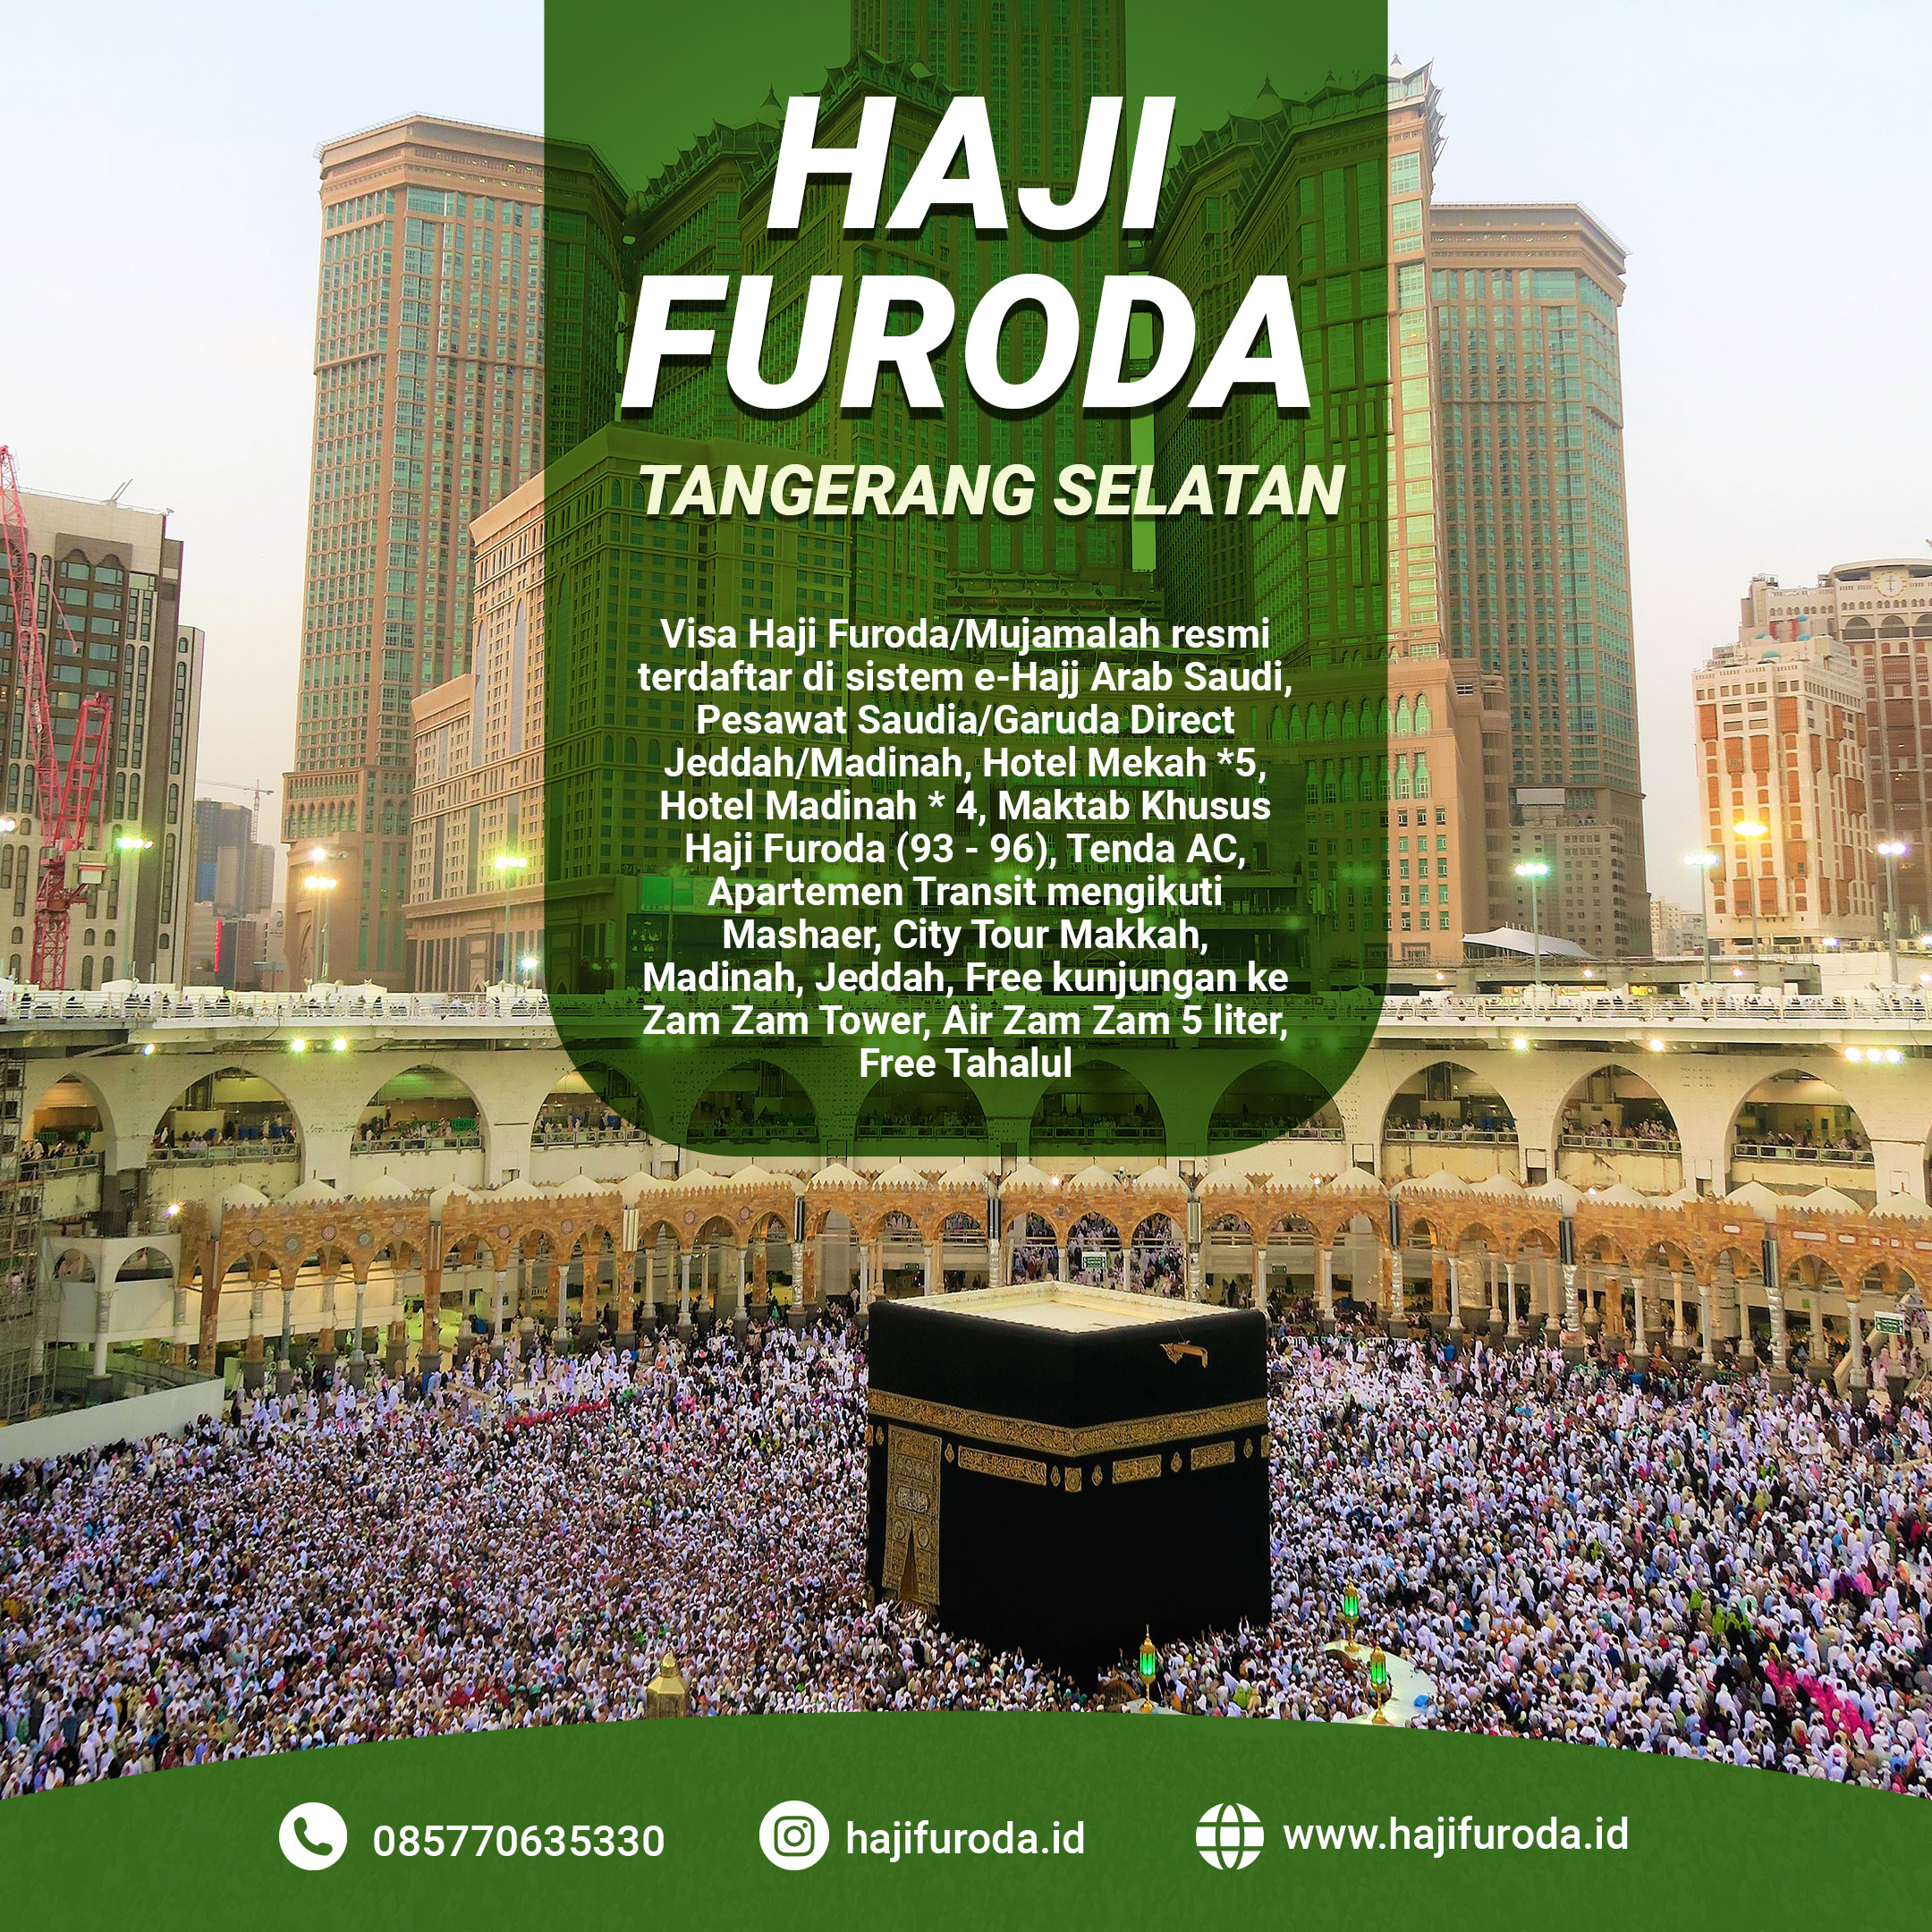 Haji Furoda Tangerang Selatan